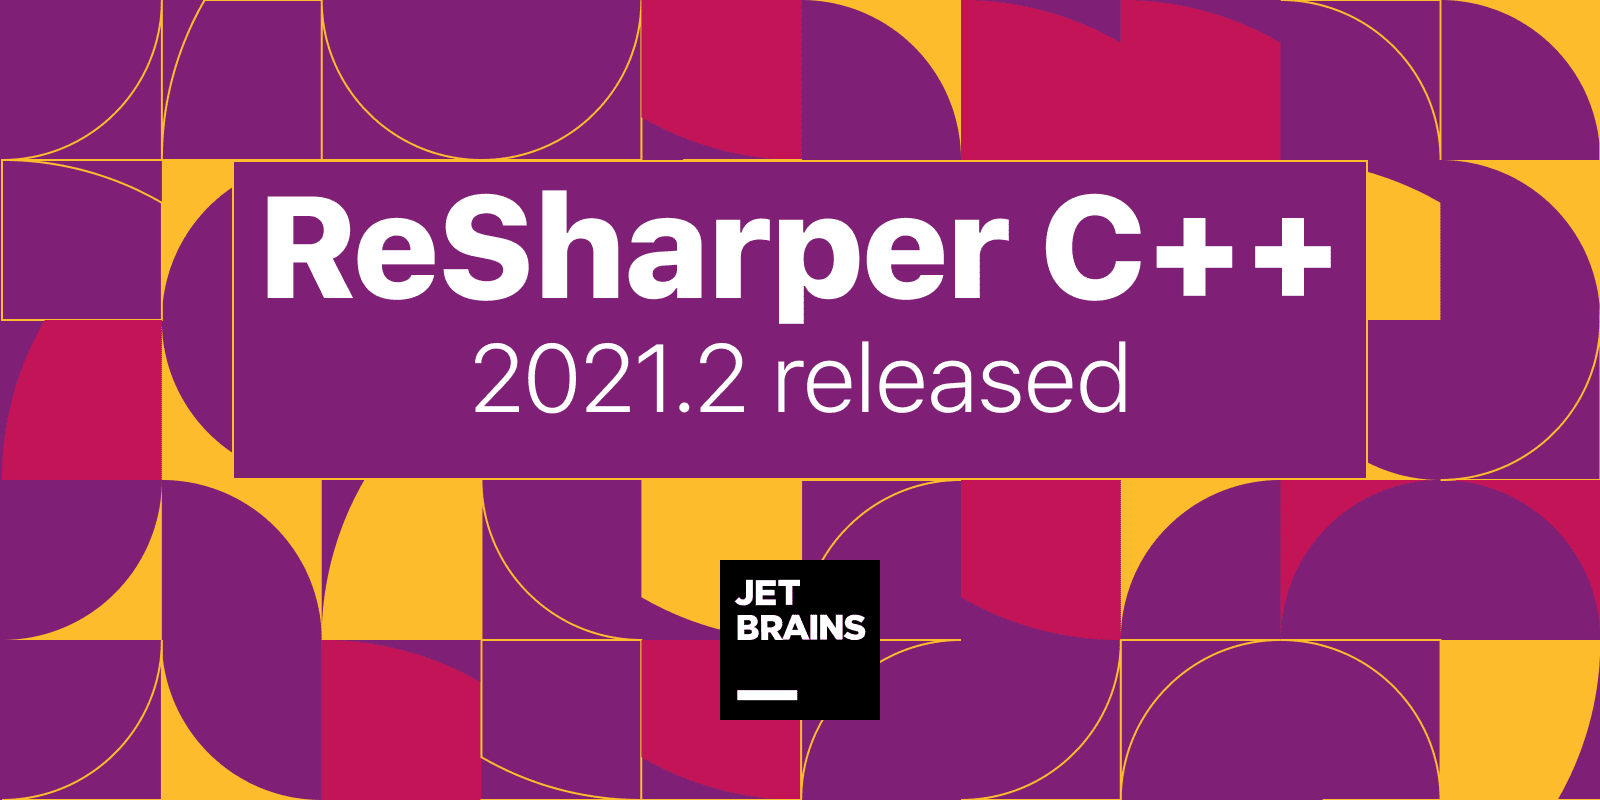 ReSharper C++ 2021.2